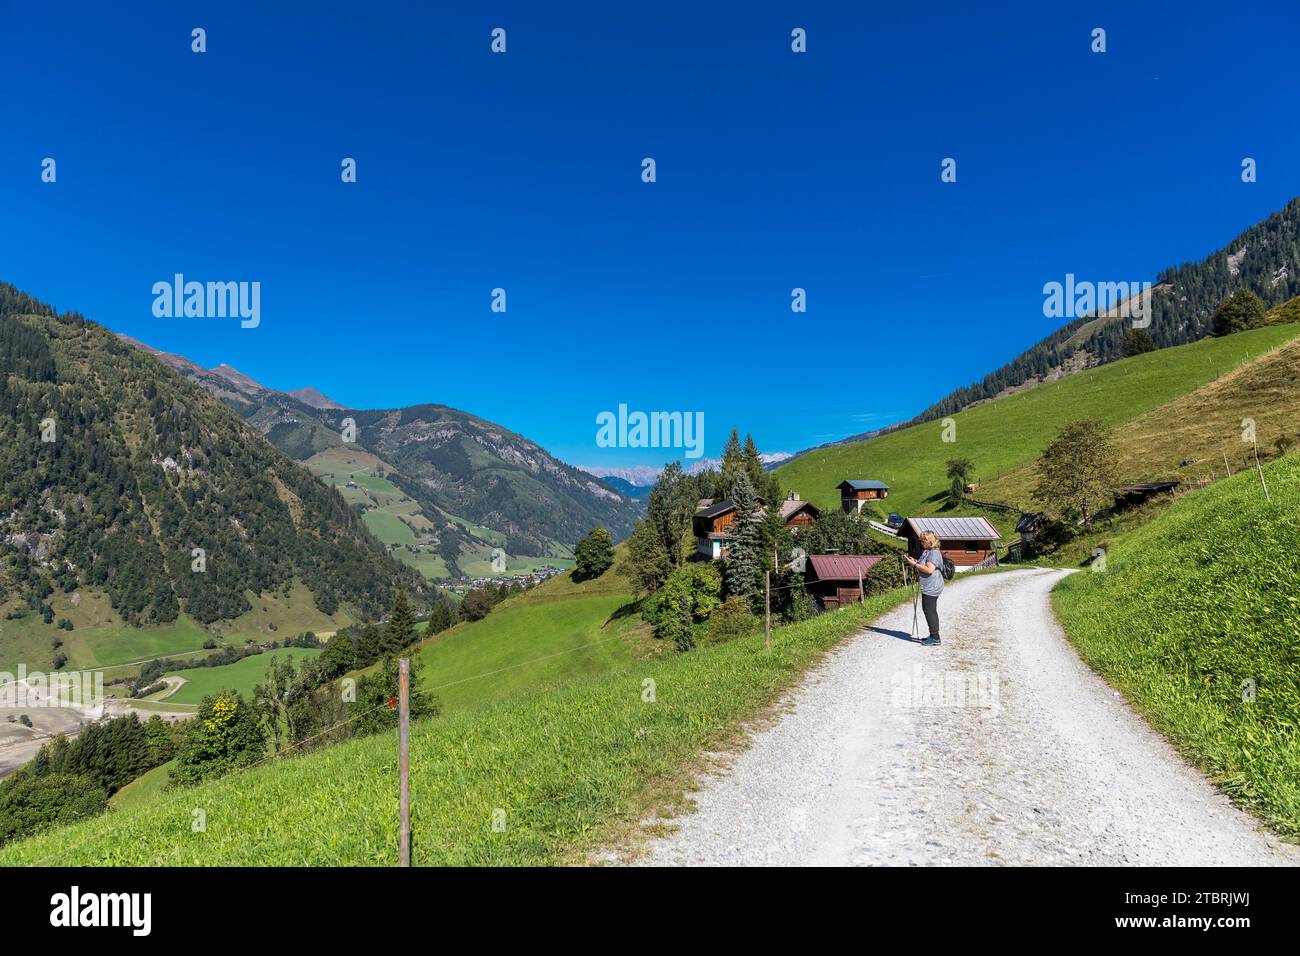 Woman taking photos of the landscape with her smartphone, Fröstlberg in the Rauris Valley, Hochbichel, 1770 m, Hirschkopf, 2252 m, the Berchtesgaden Alps in the background, Rauris, Pinzgau, Salzburger Land, Austria Stock Photo